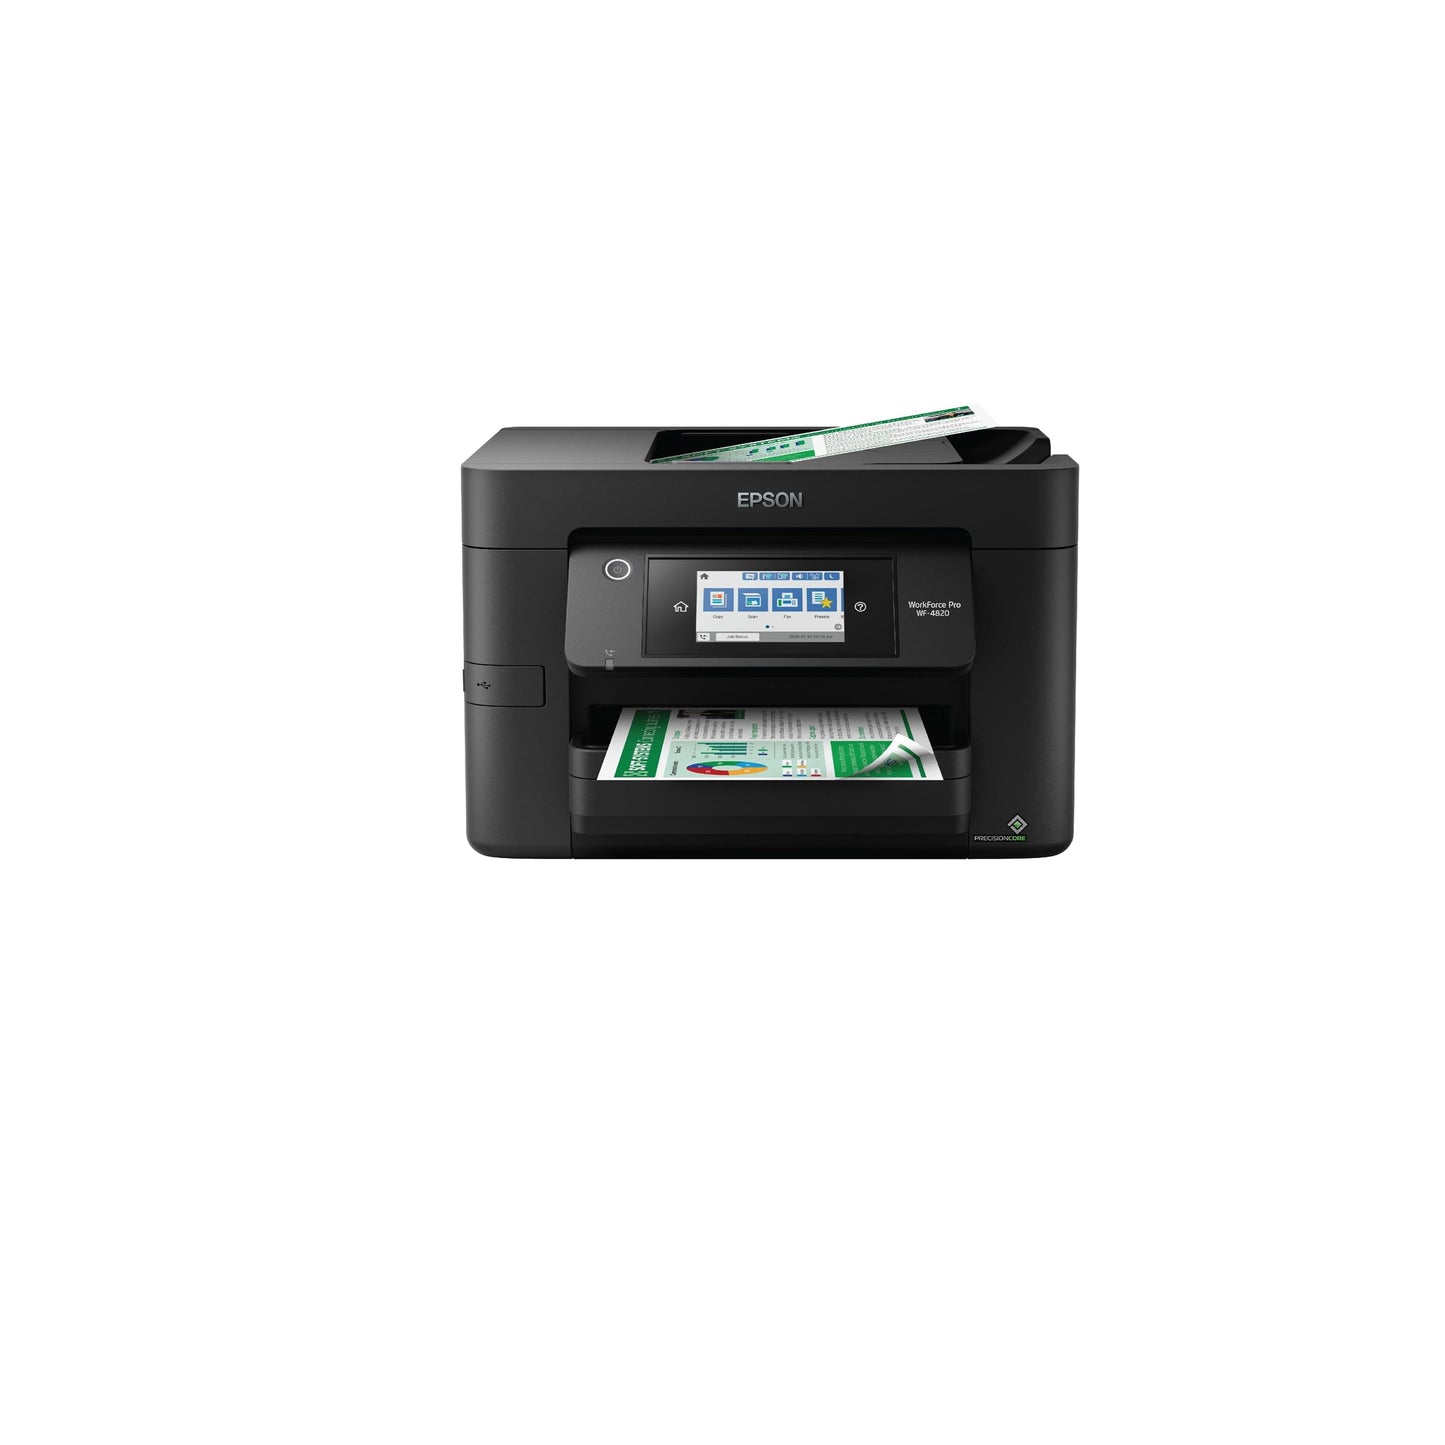 Epson® Workforce® Pro WF-4820 Wireless Color Inkjet All-In-One Printer, Black, Large